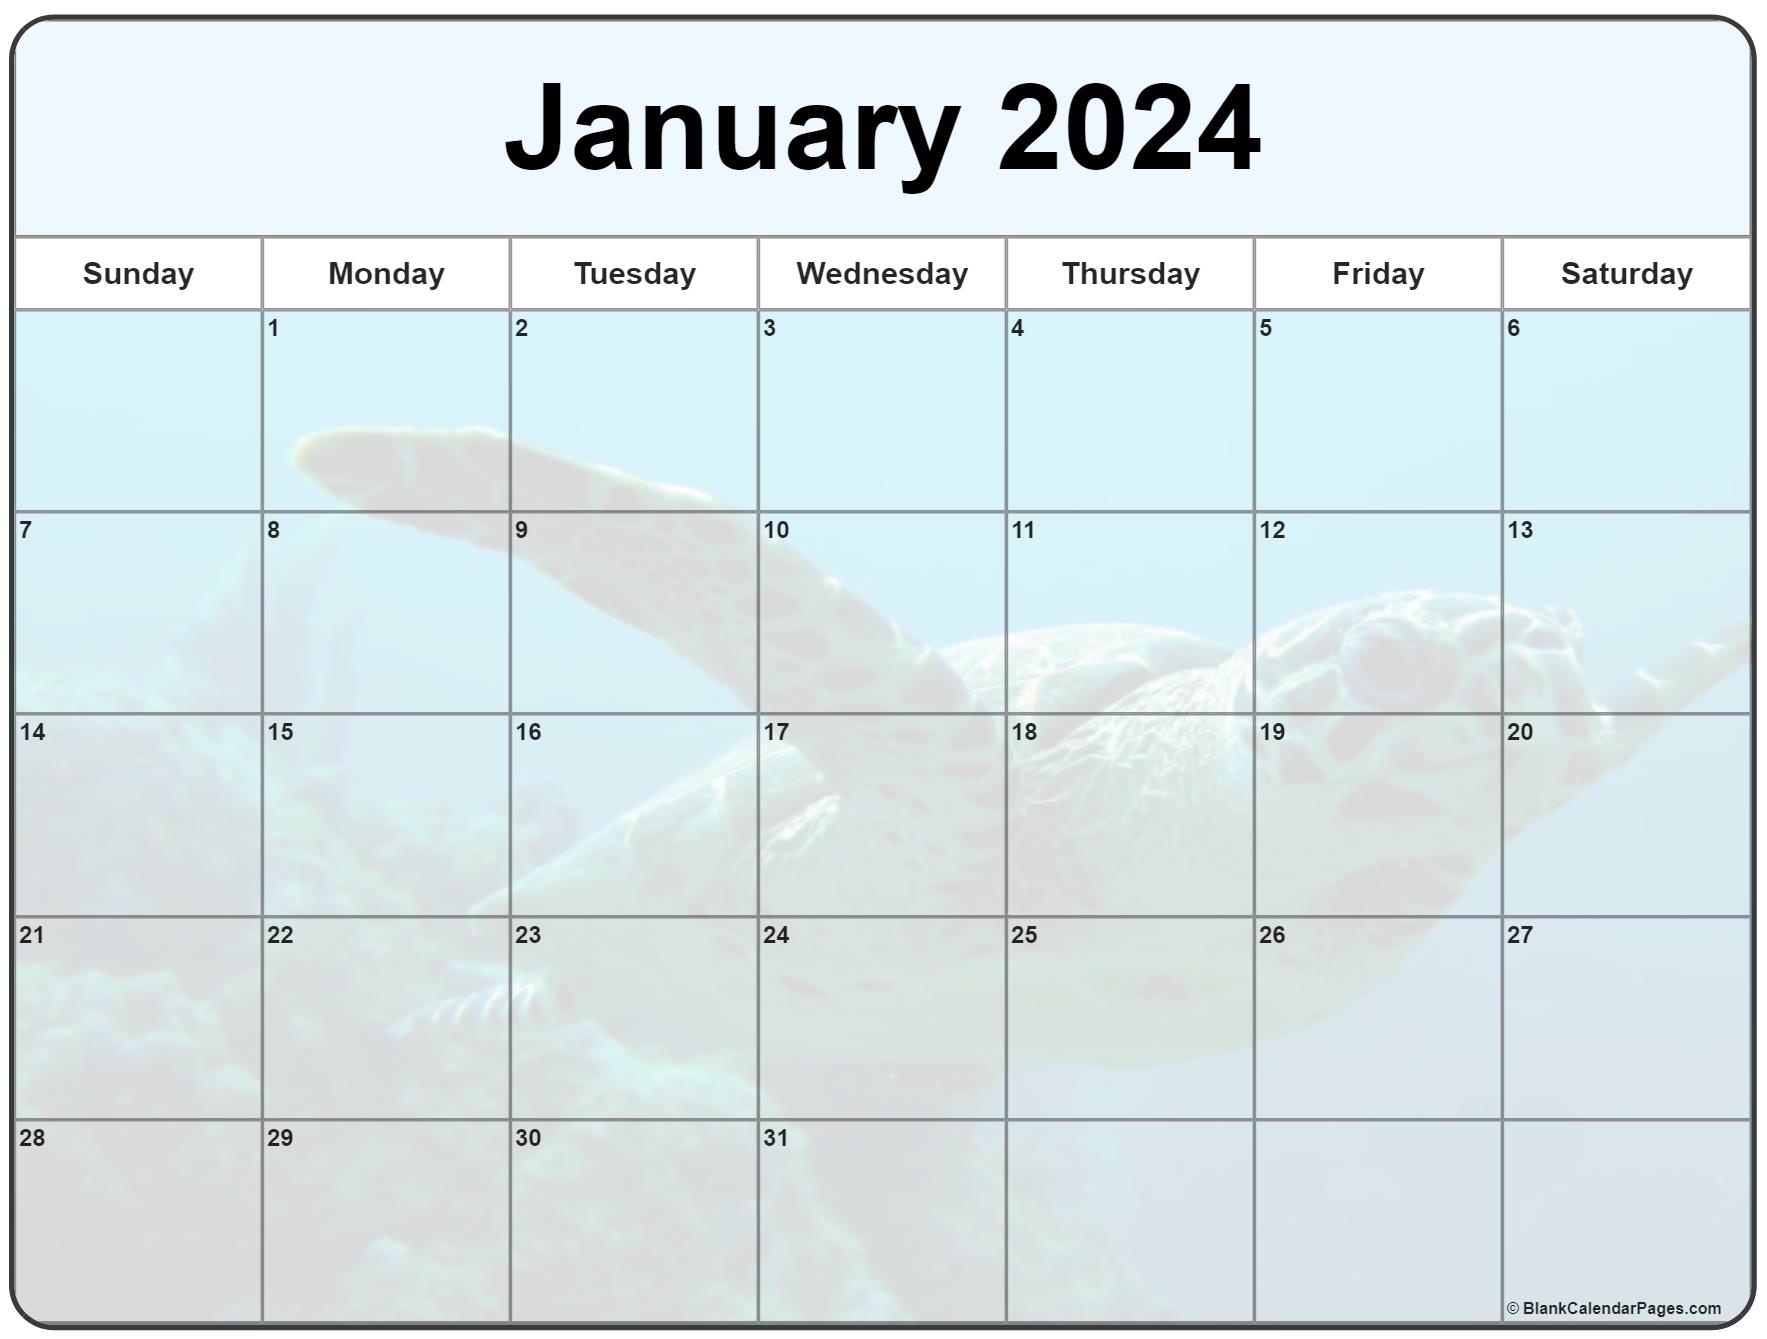 January 2024 Calendar Events Cool The Best List Of School Calendar Dates 2024